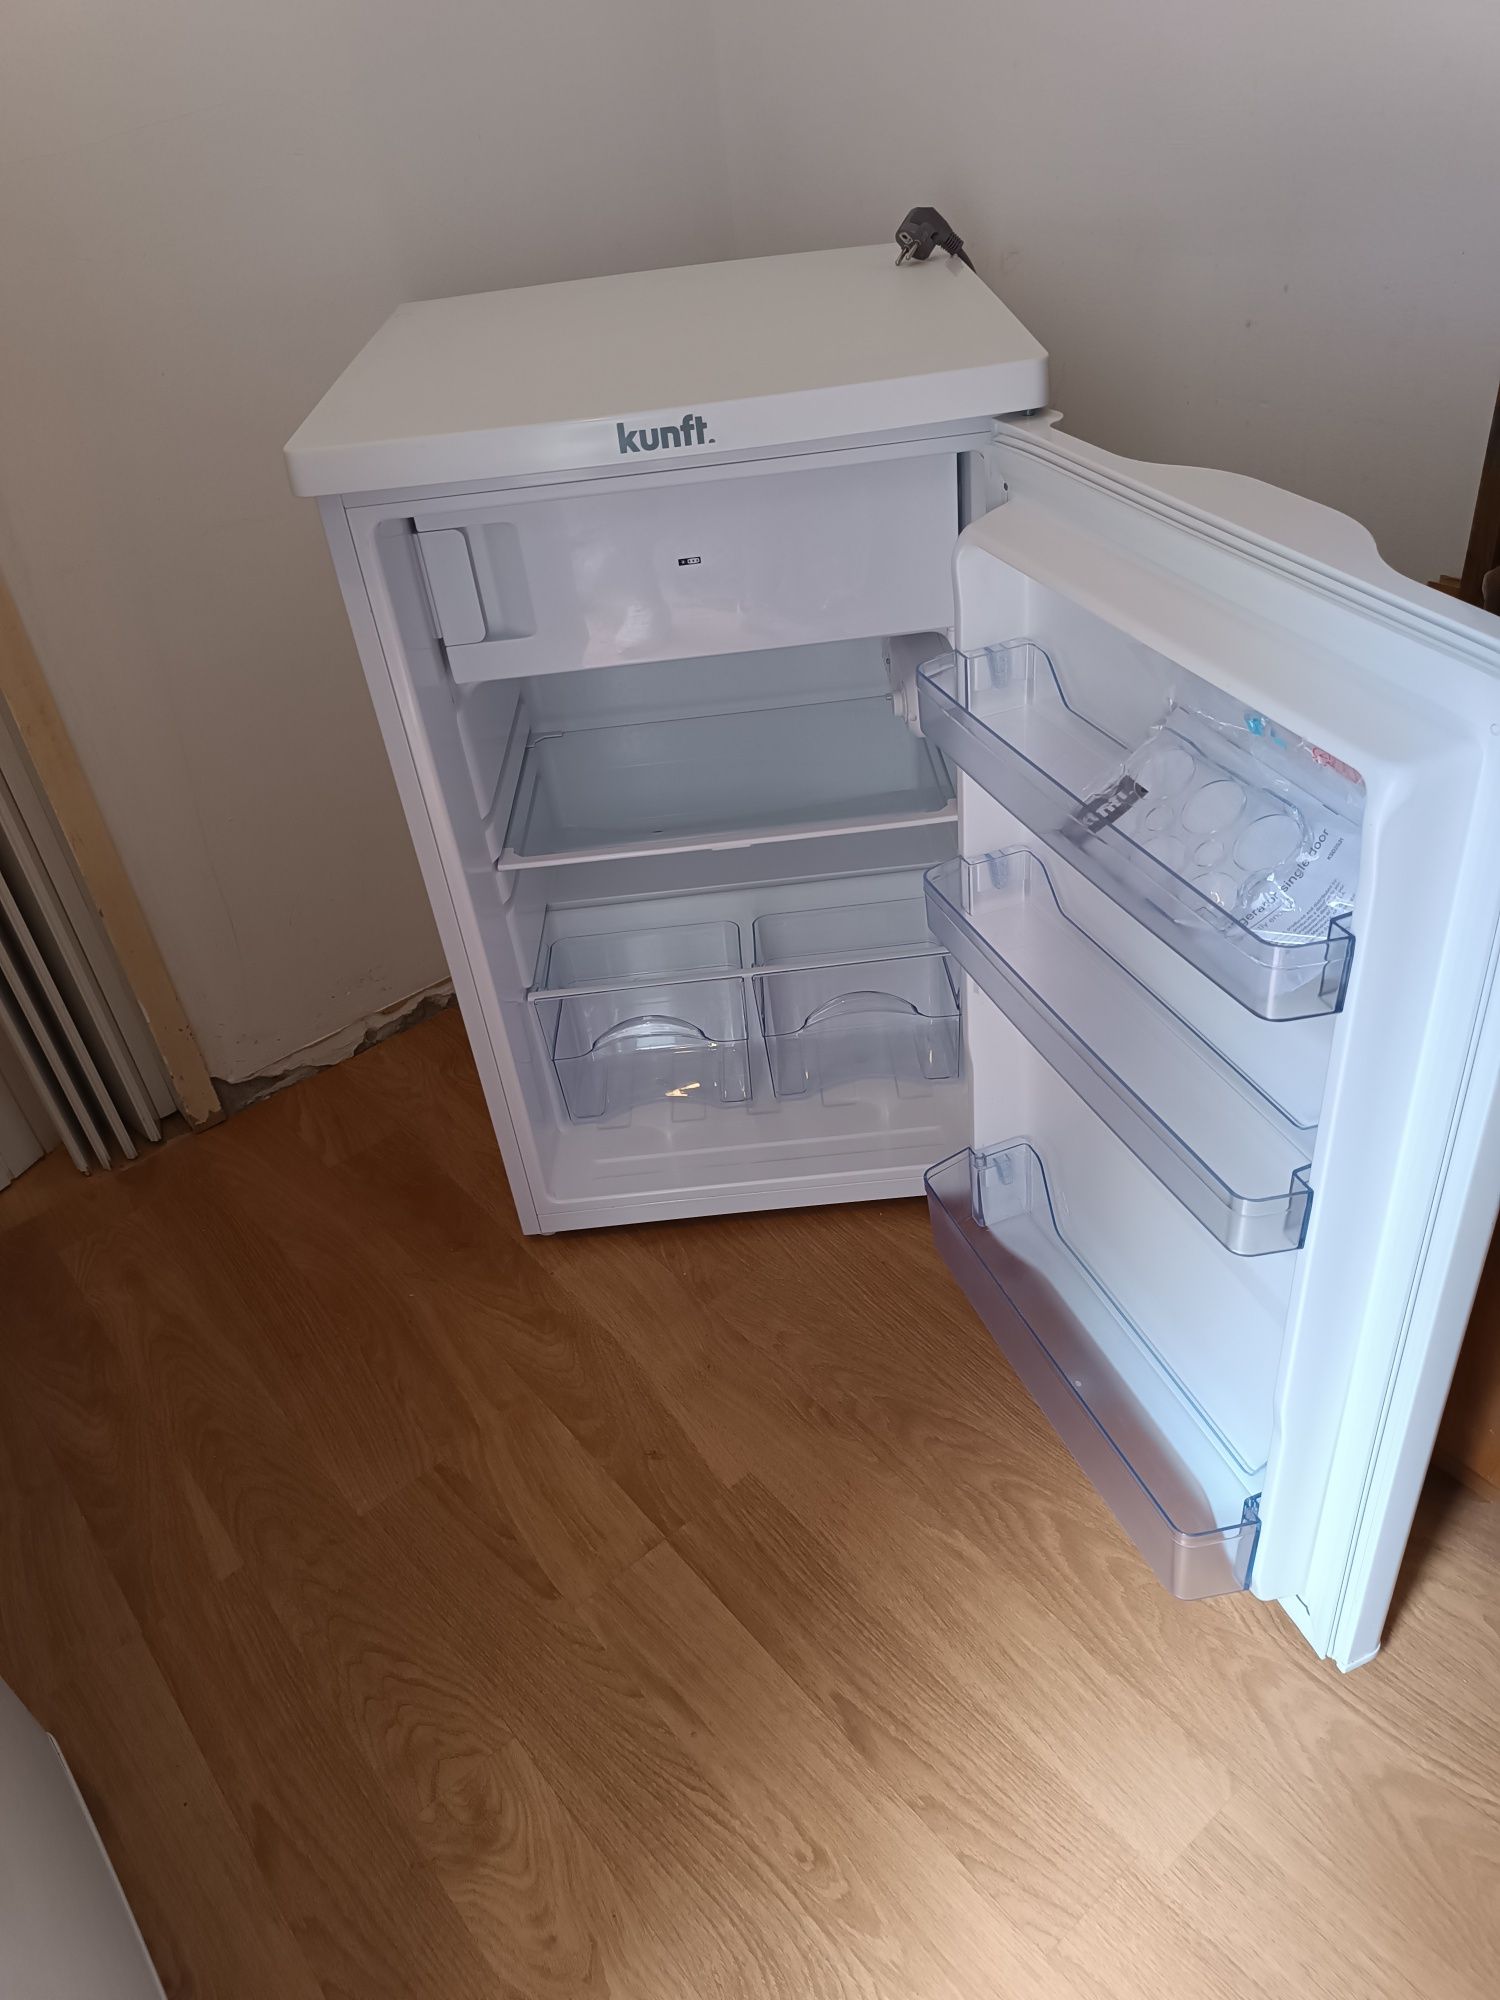 Mini frigorífico kunft